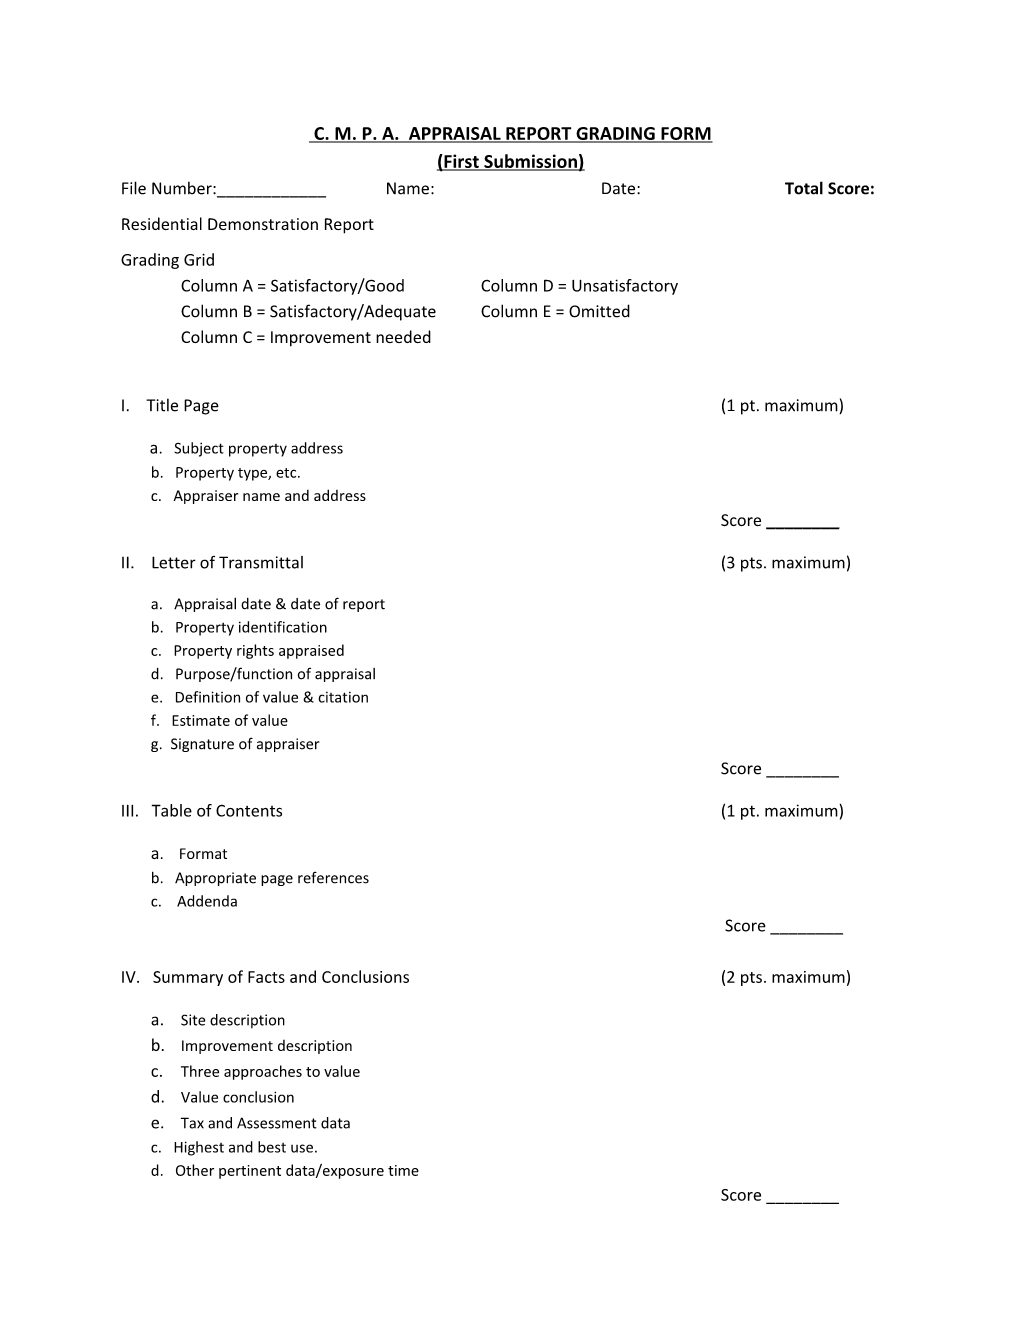 C. M. P. A. Appraisal Report Grading Form